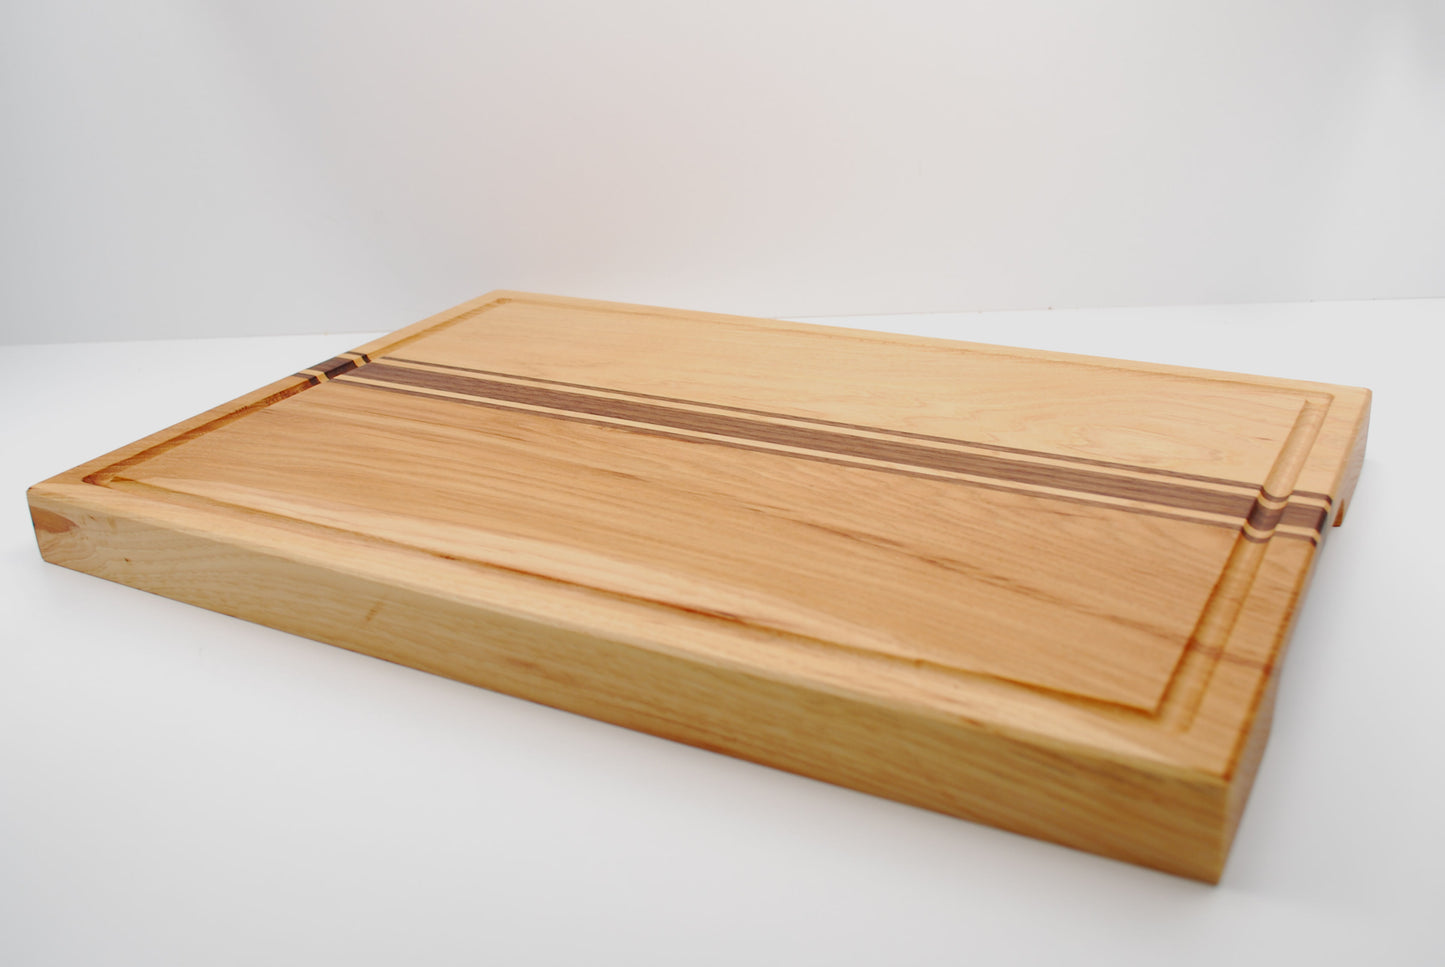 Wood Cutting Board - Walnut and Maple Wood